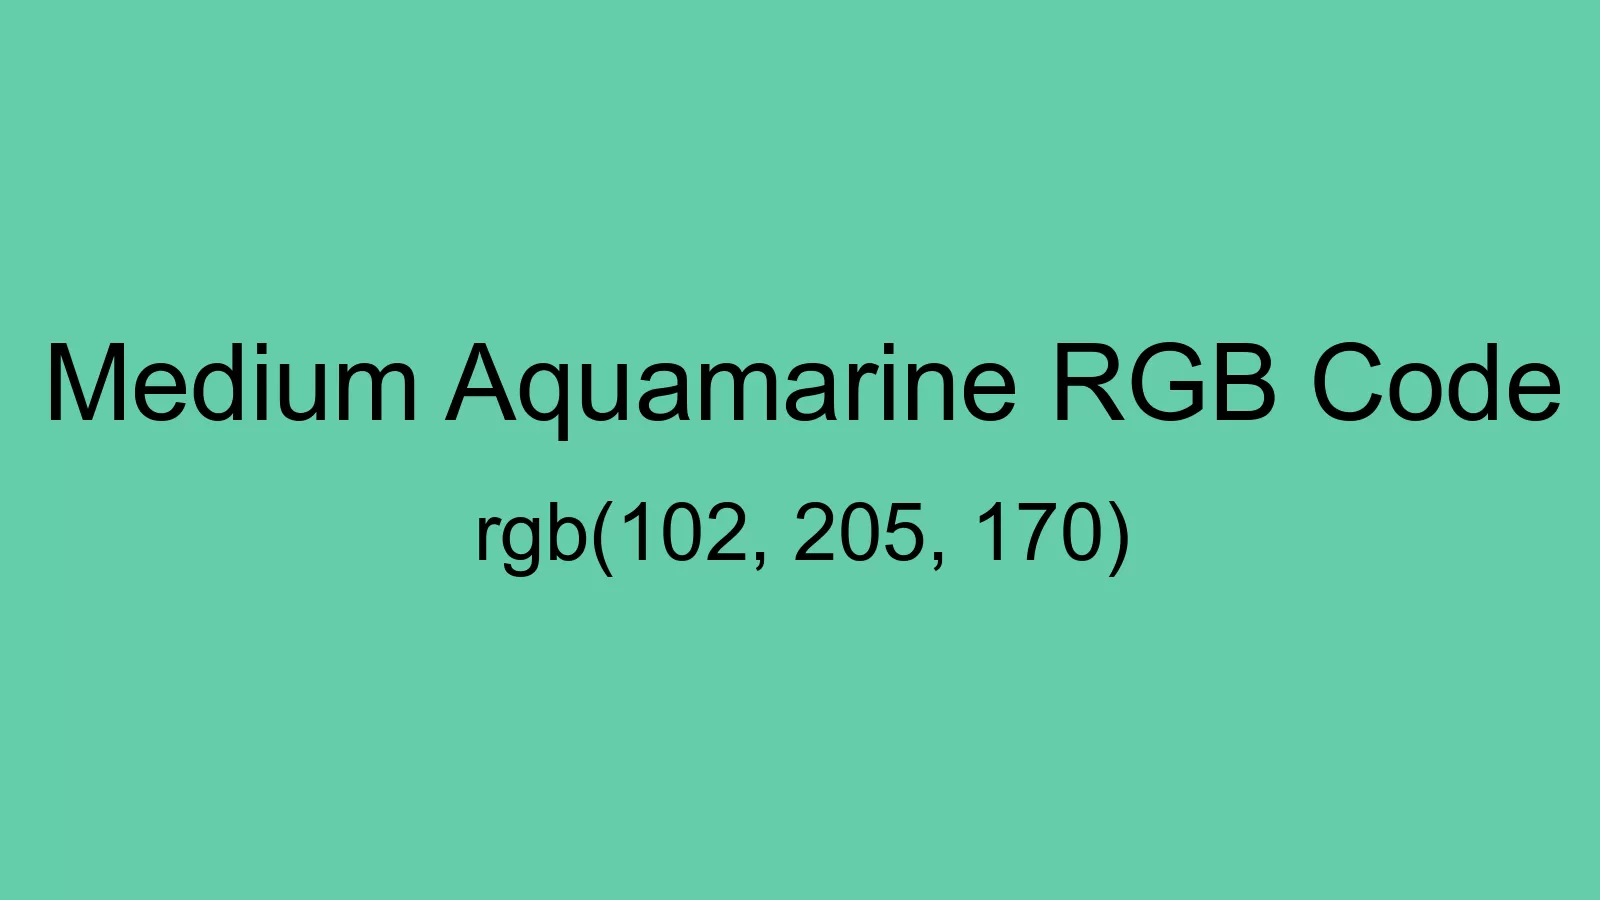 preview image of Medium Aquamarine color and RGB code